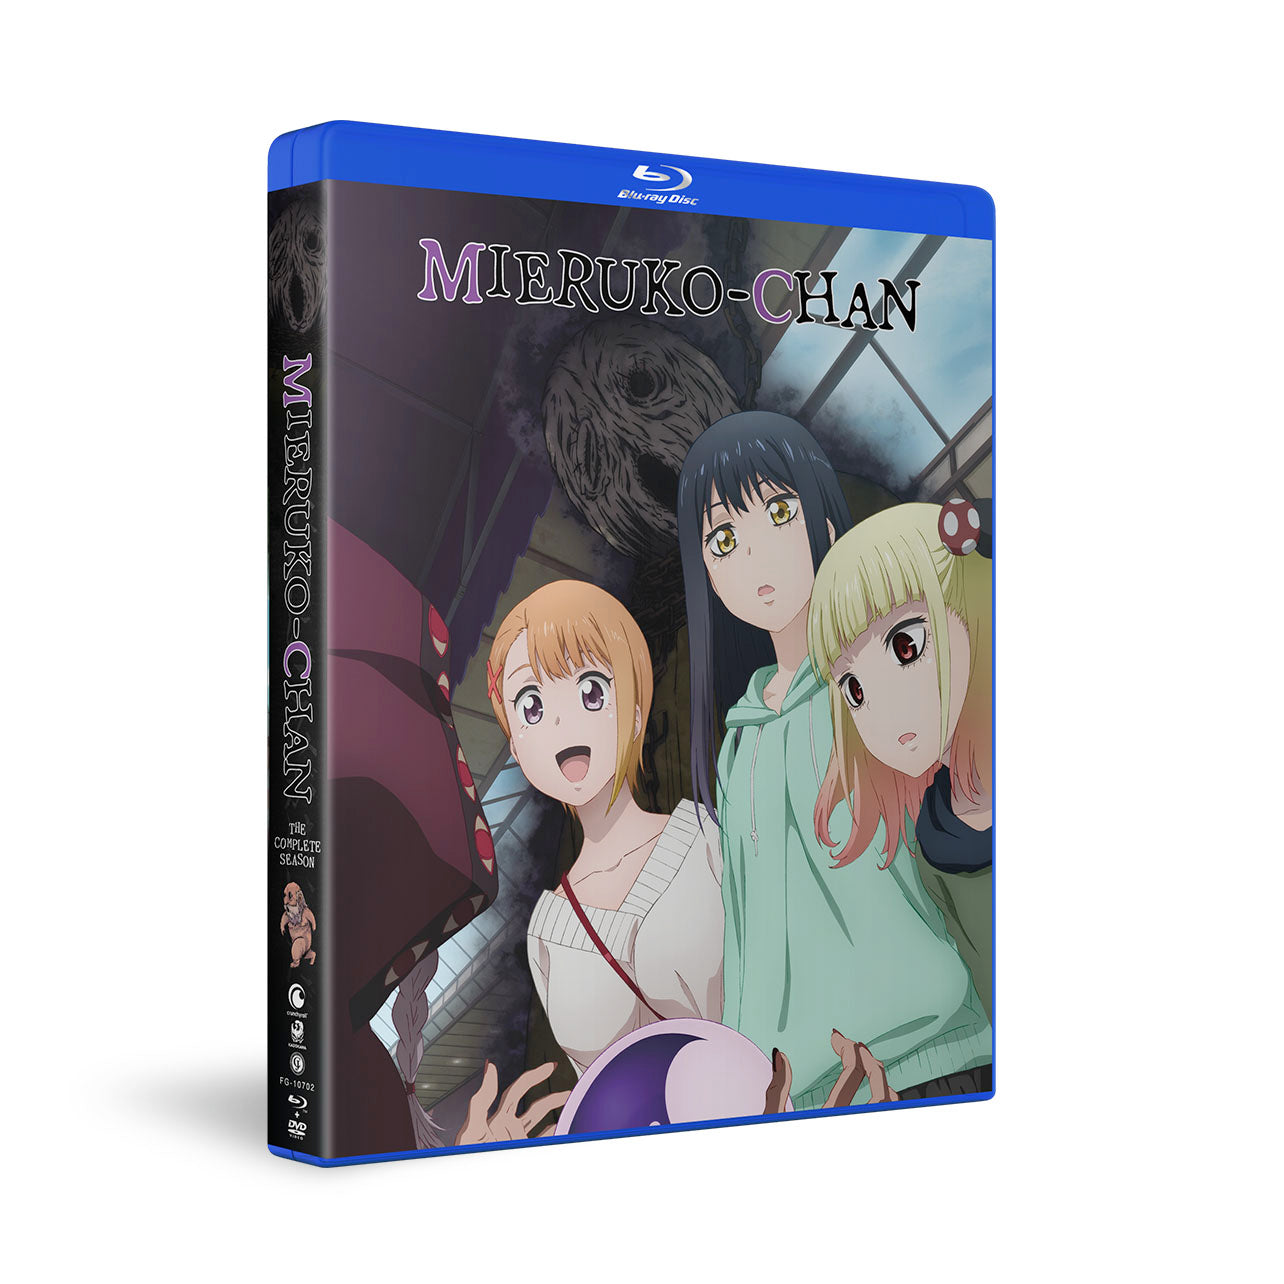 Mieruko-chan - The Complete Season - BD/DVD - LE image count 3